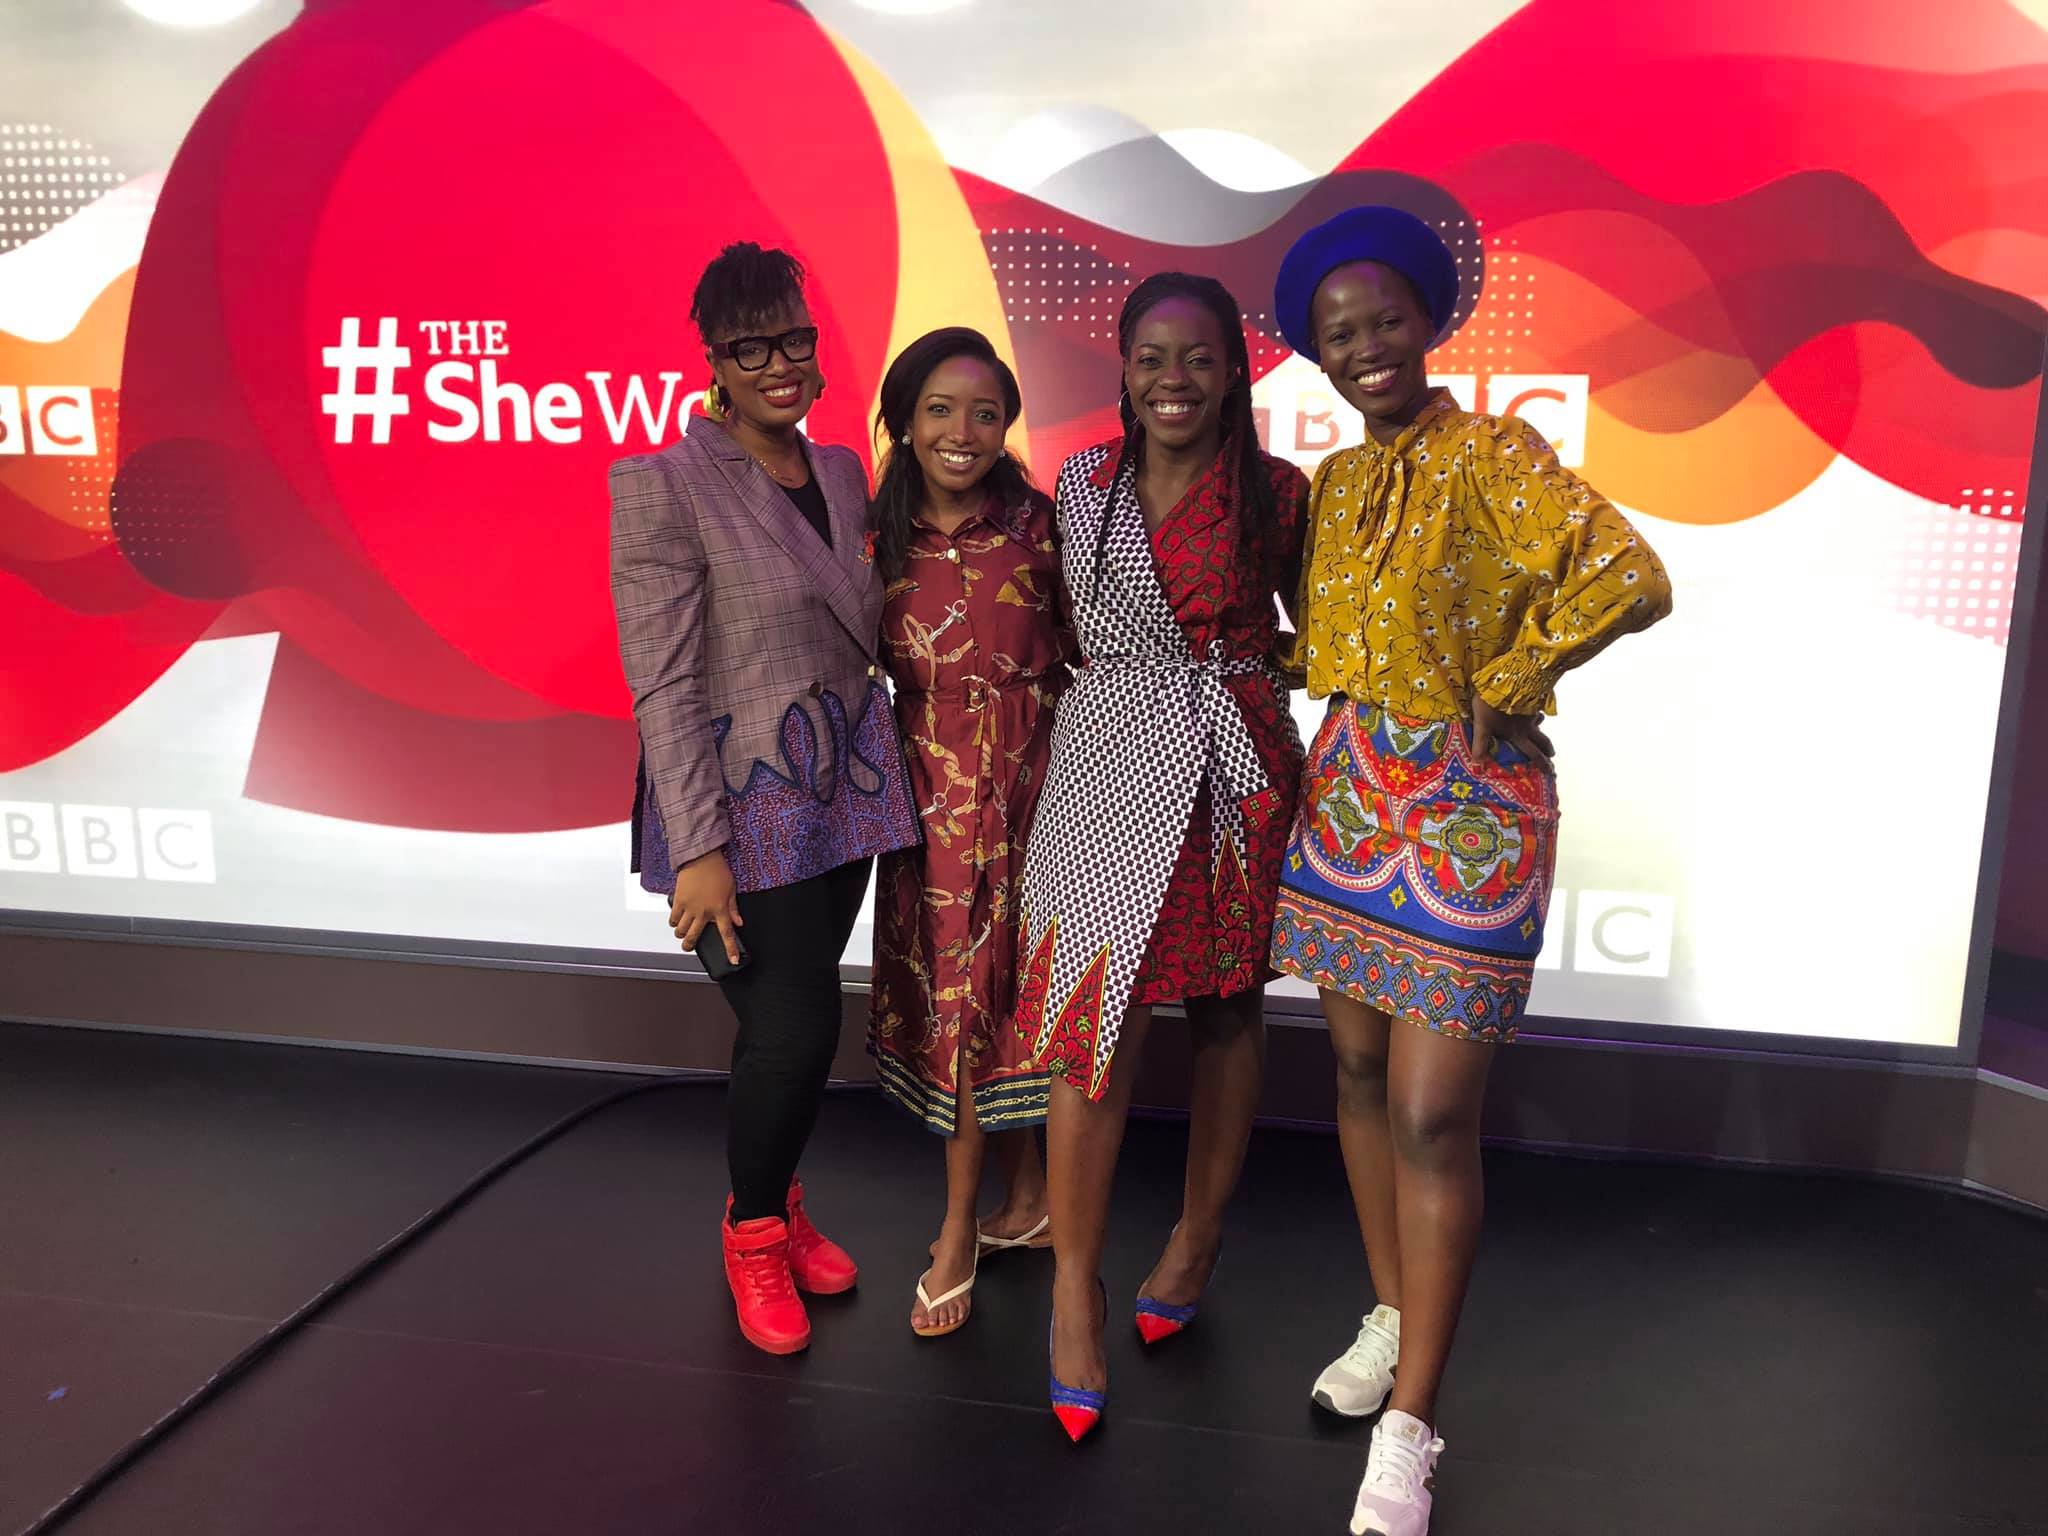  with The She Word co-panelists Anita Nderu (Kenya), Sade Ladipo (Nigeria), and Mandy Amandine (Burundi) at BBC Africa studios in Nairobi, Kenya 